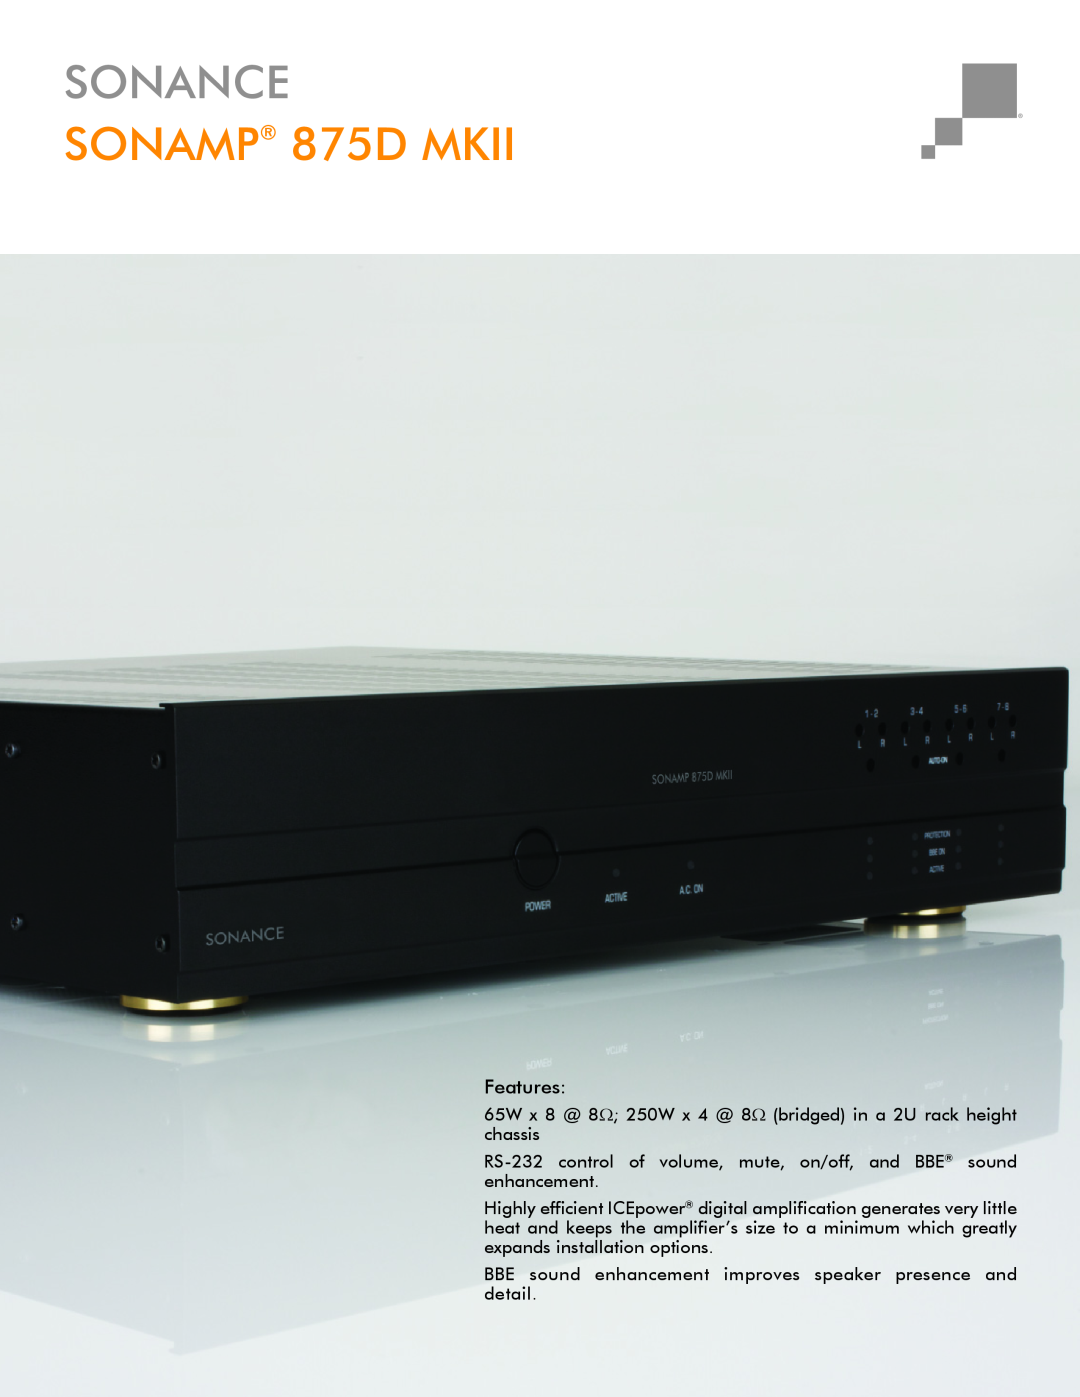 Sonance manual Sonance, SONAMP 875D MKII, Features 